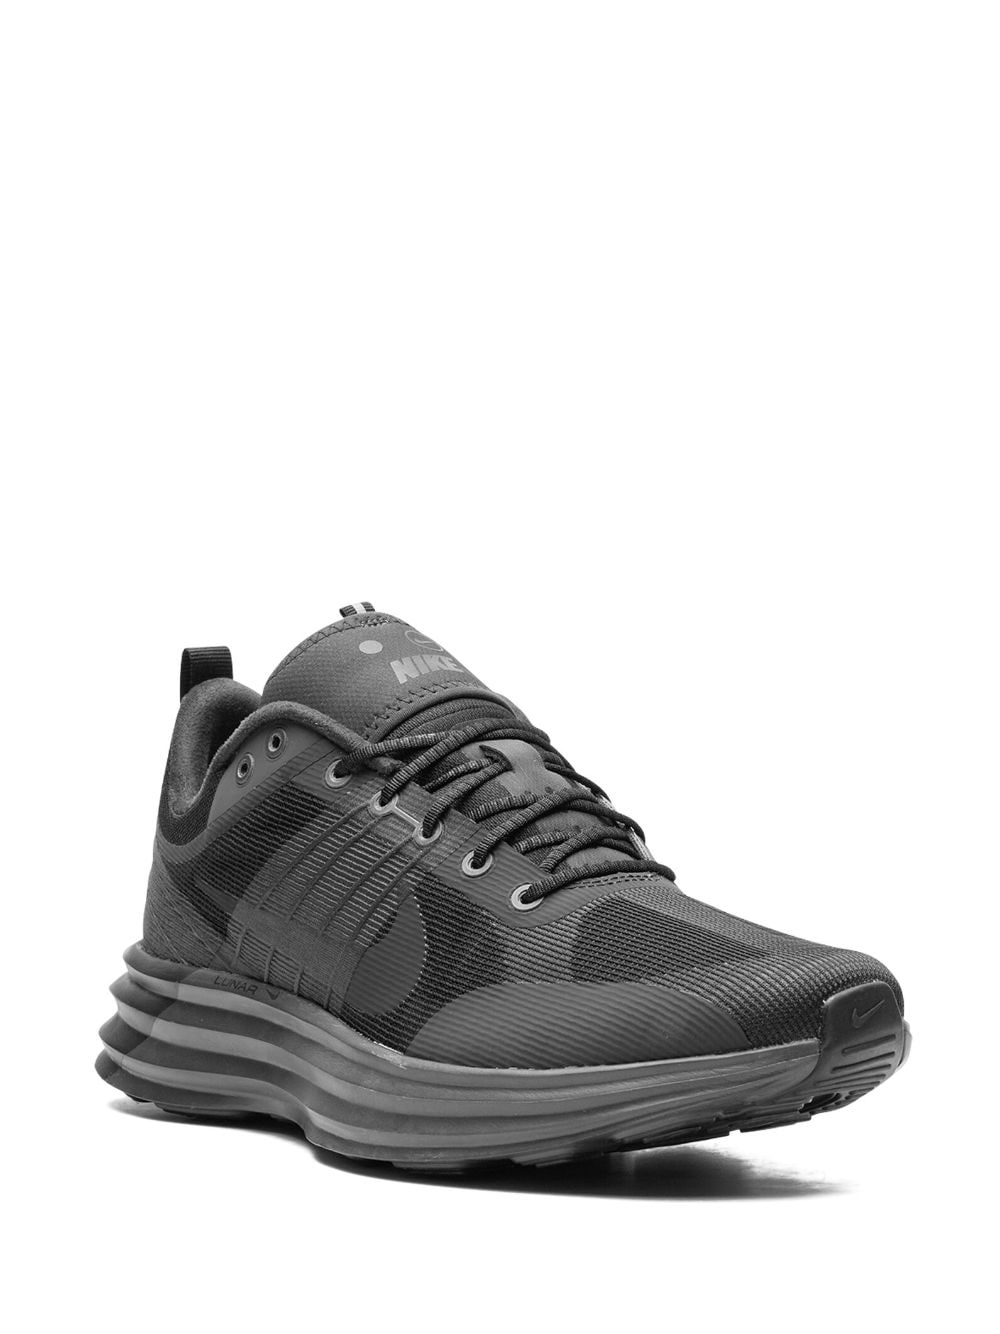 Nike Lunar Roam "Dark Smoke Grey/Anthacite Black) sneakers - Grijs